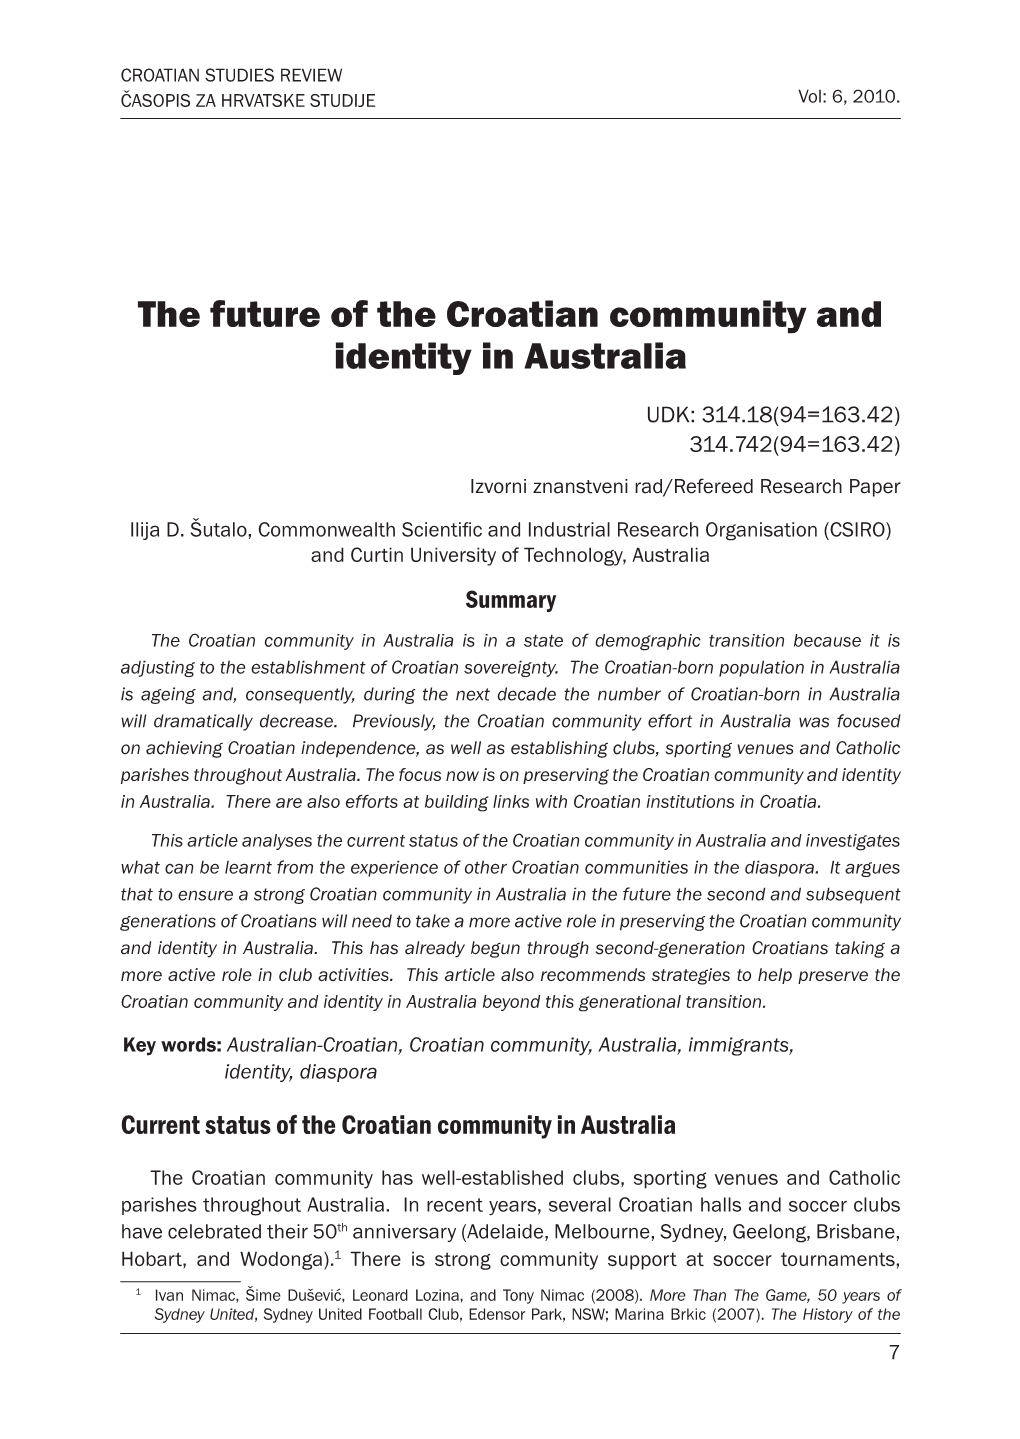 The Future of the Croatian Community and Identity in Australia